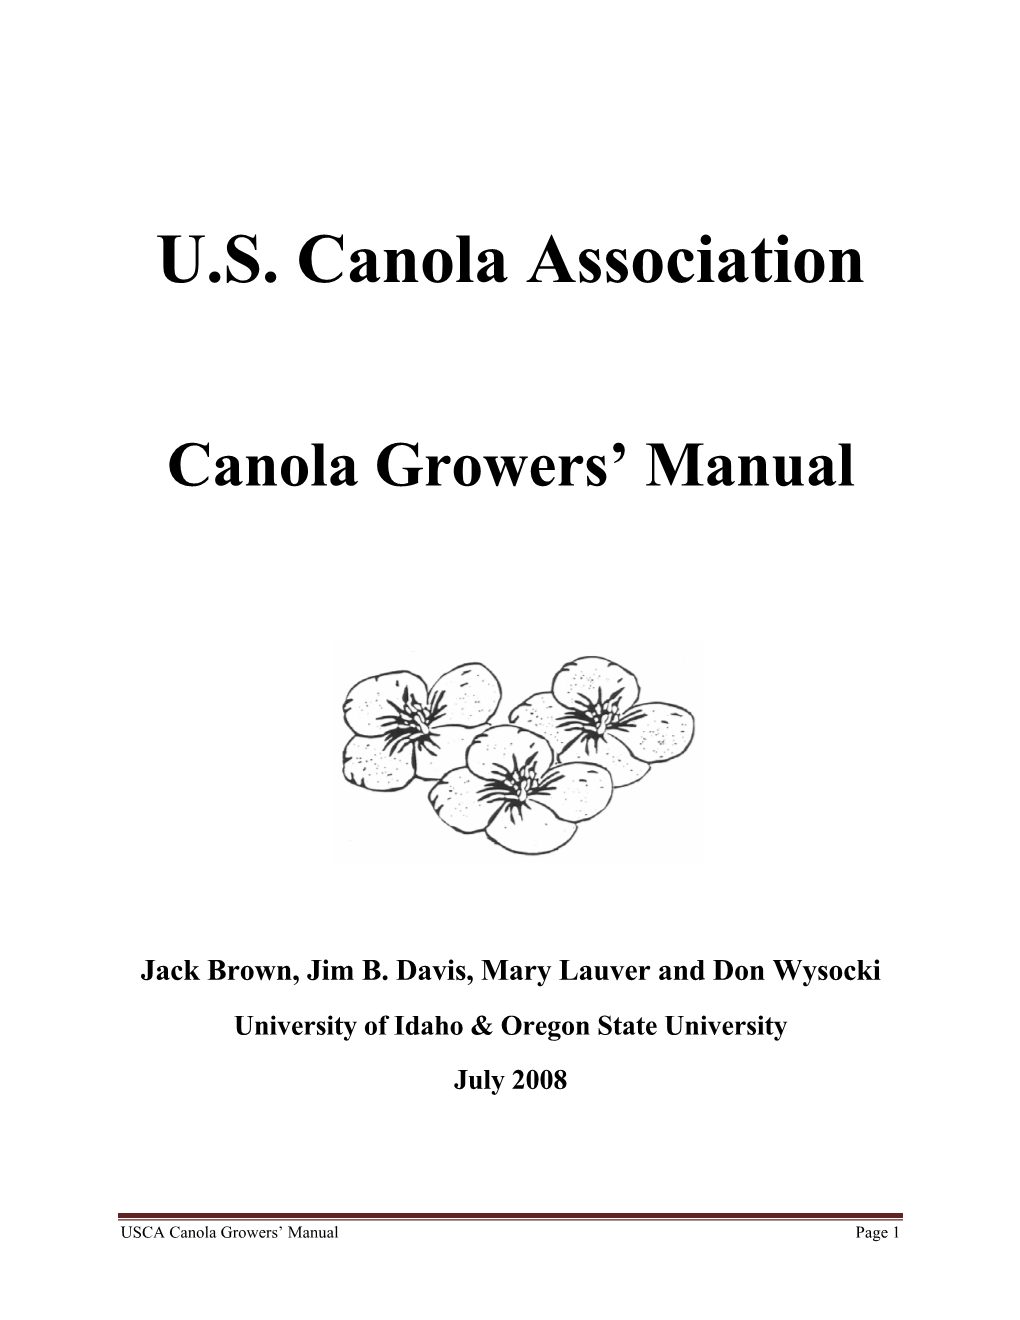 USCA Canola Growers' Manual